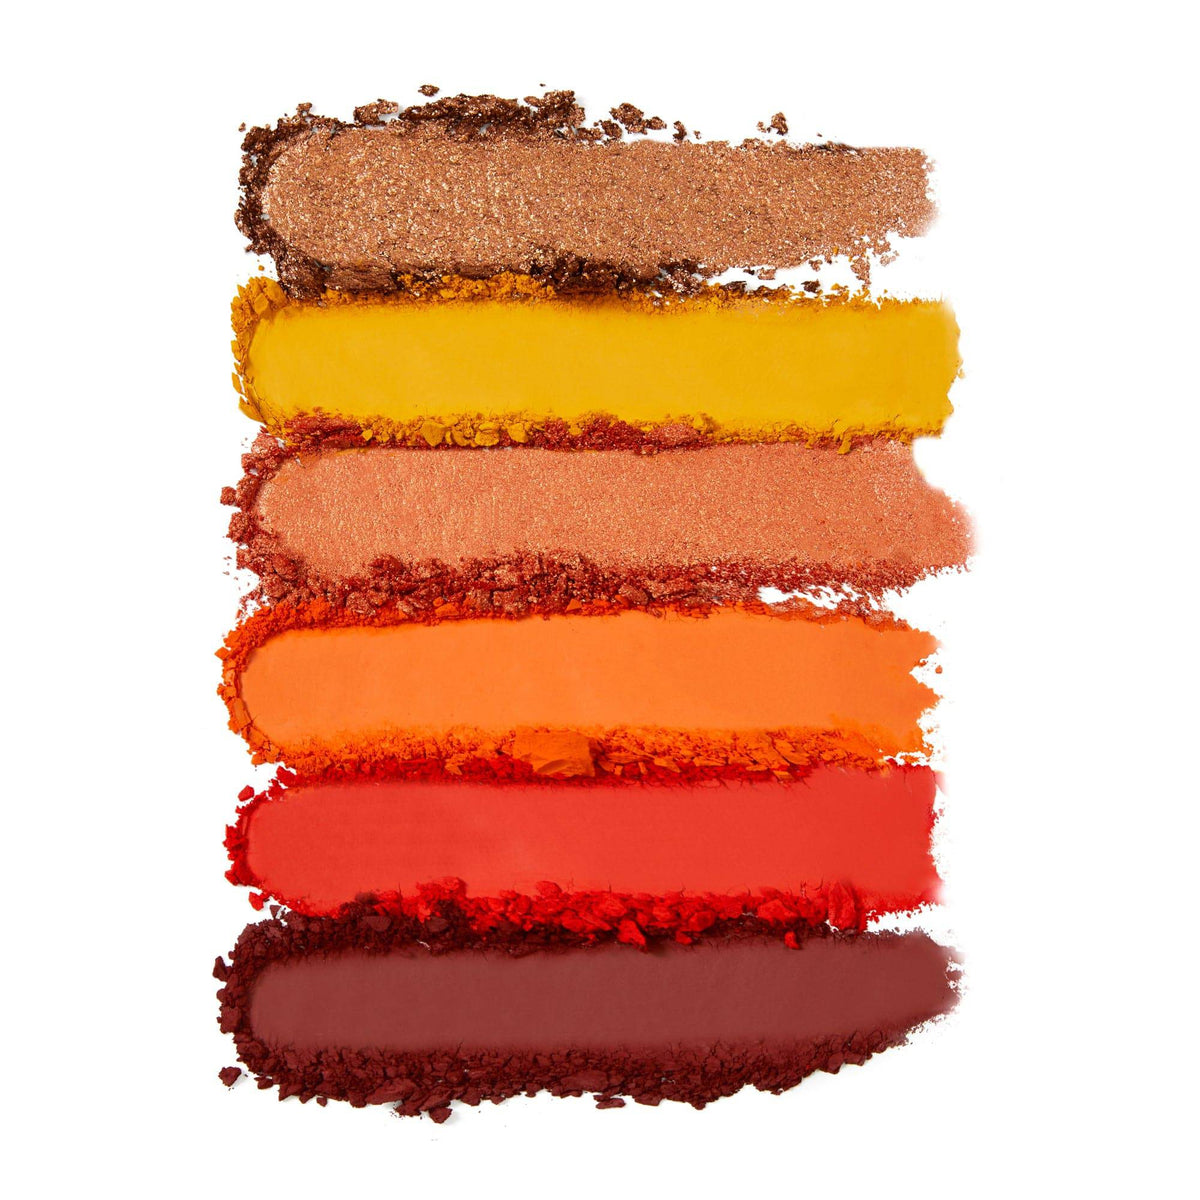 Sunset Chic Pigment Palette - Coloured Raine Cosmetics